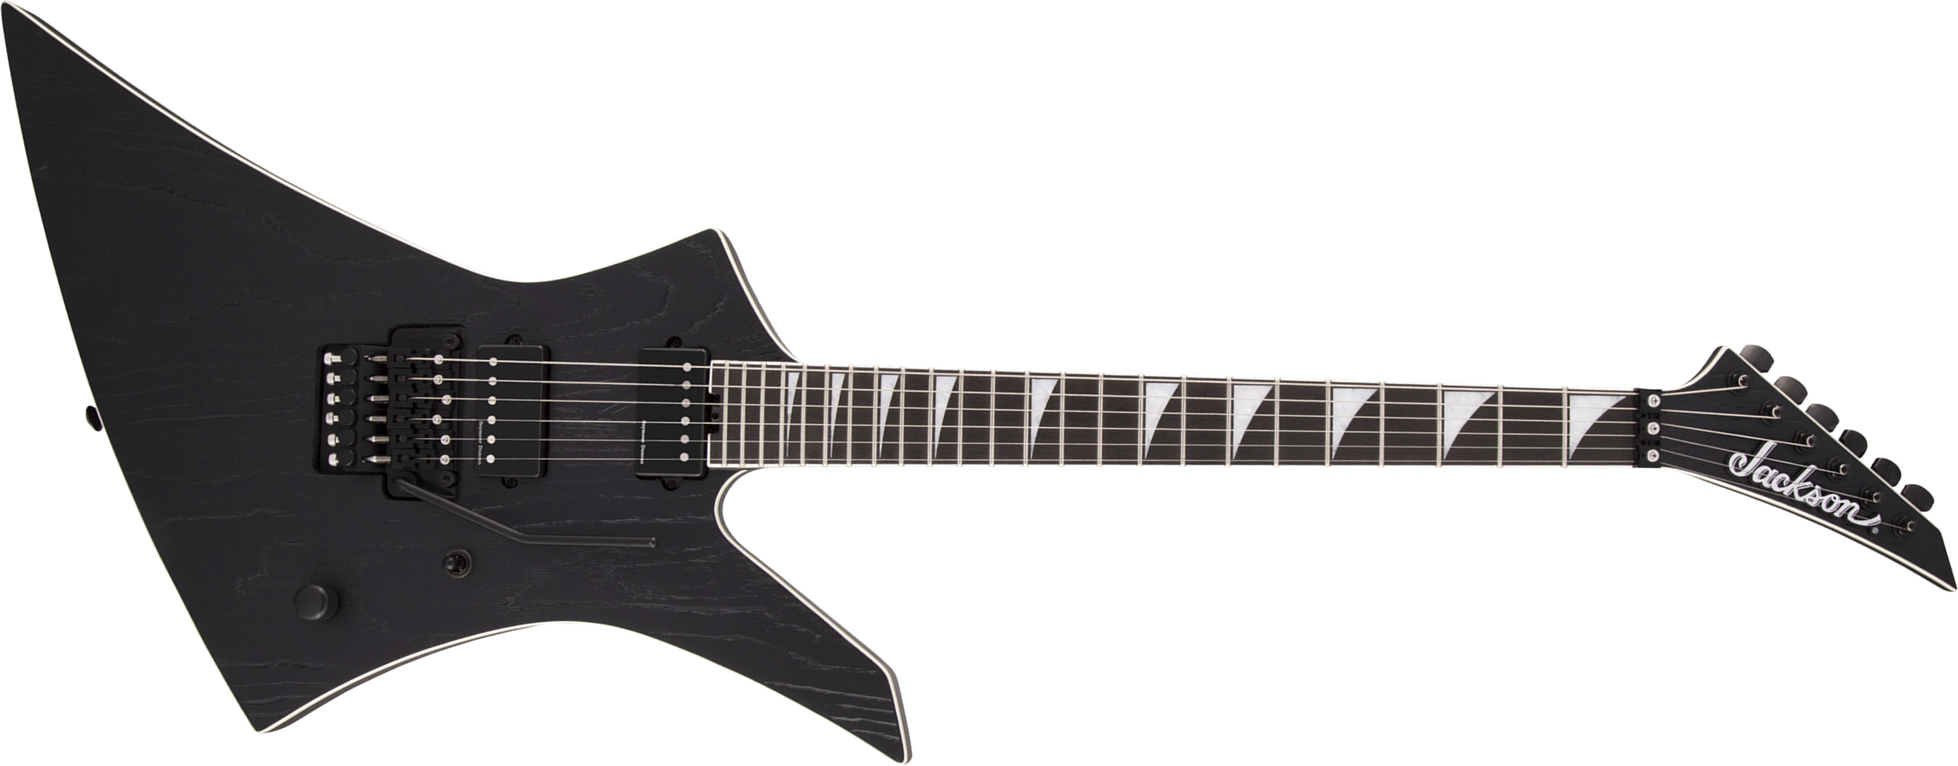 Jackson Jeff Loomis Kelly Ash Pro Signature 2h Seymour Duncan Fr Eb - Black - E-Gitarre aus Metall - Main picture